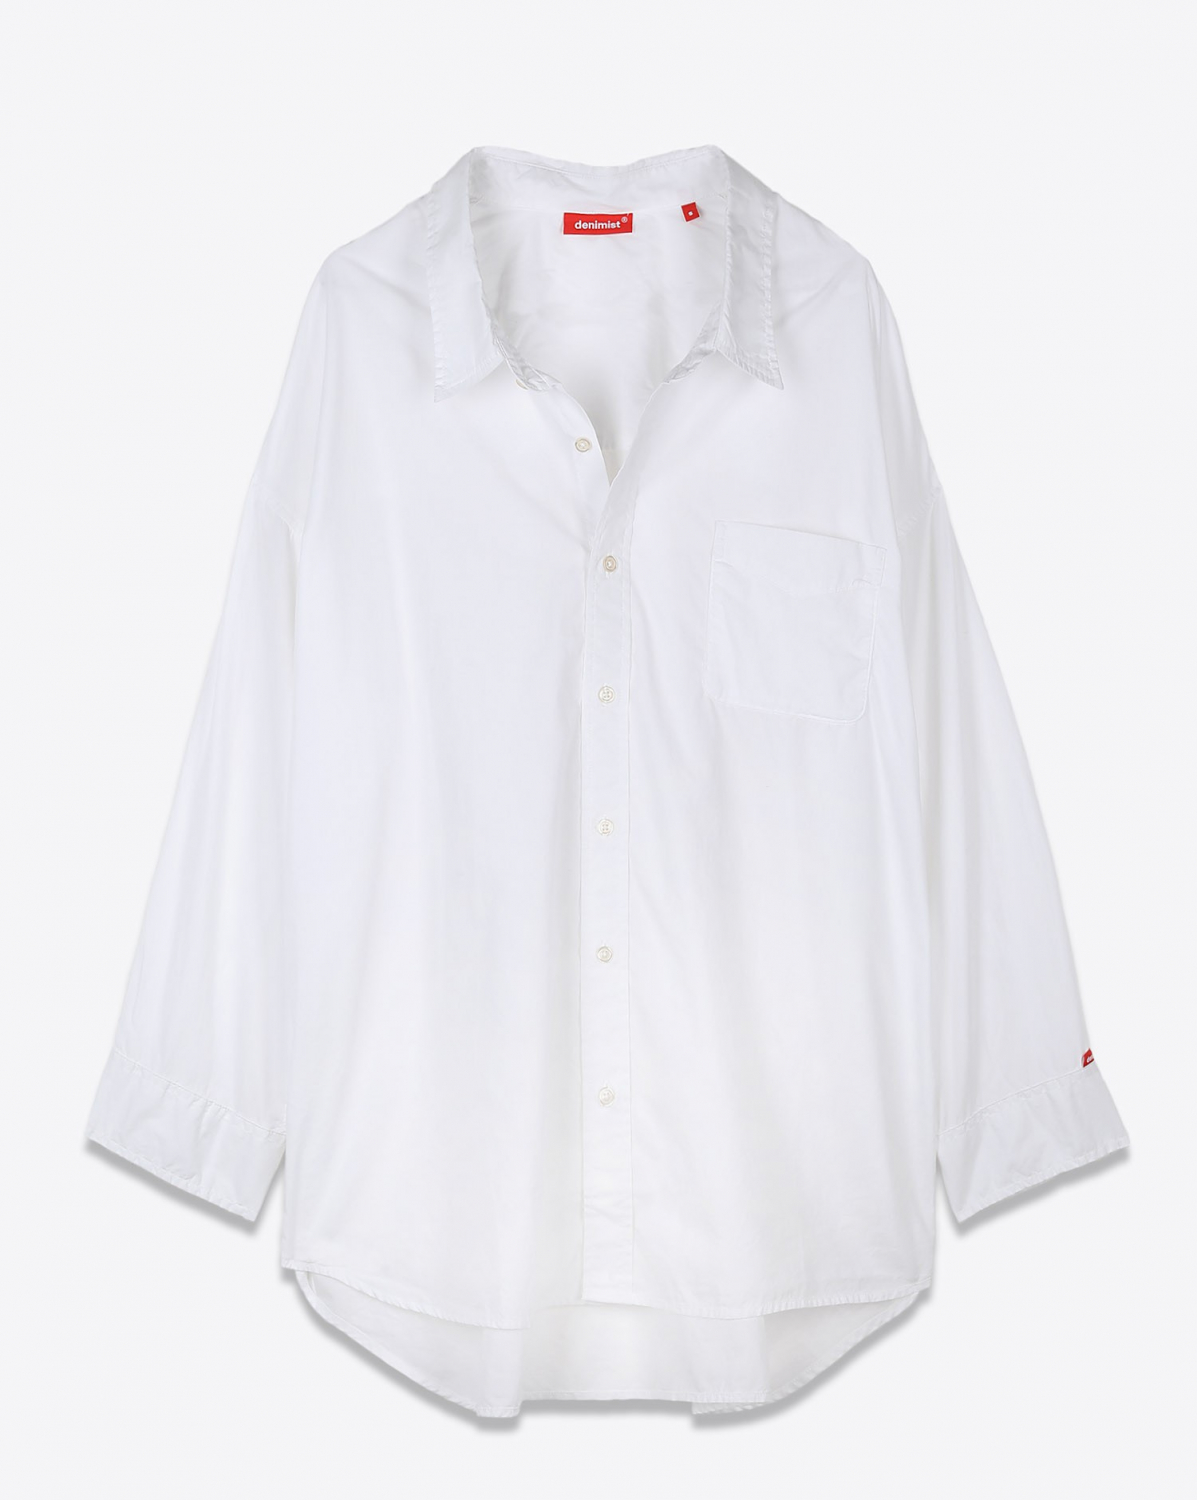 Chemise Denimist Button Front Shirt - White